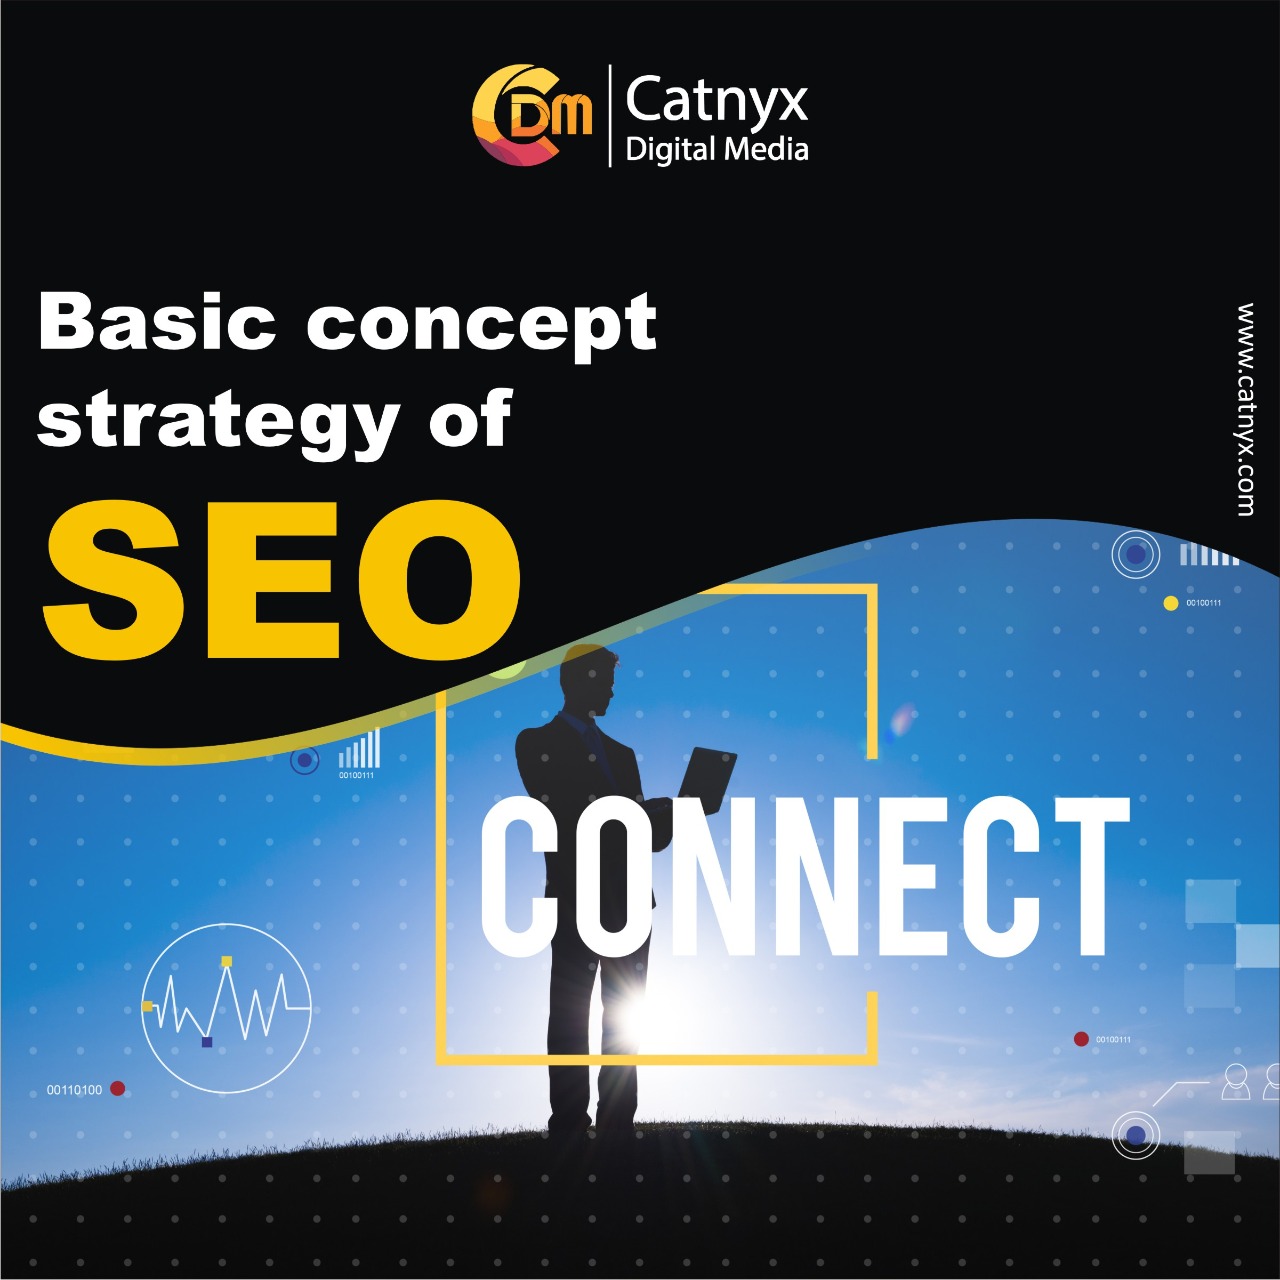 Catnyx
Digital Media

(GY

Basic concept
strategy of

SEO

 

[Neh RMR WV